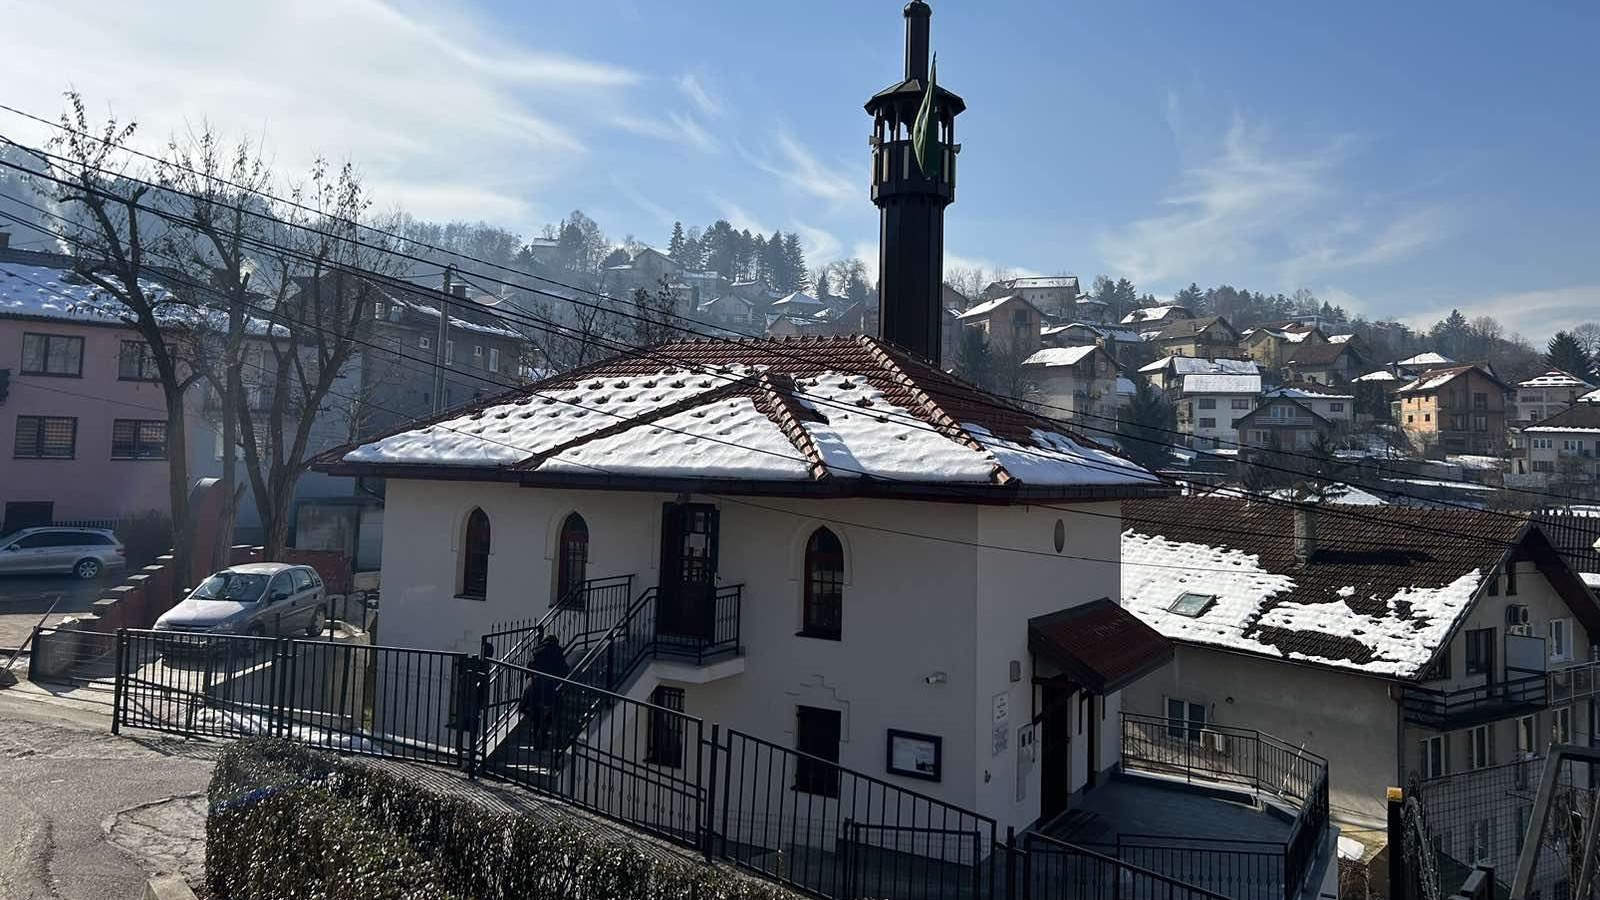 Dan vakifa: Svečano otvorena džamija "Abdullah Tarmum" u Gornjim Kovačićima (VIDEO)